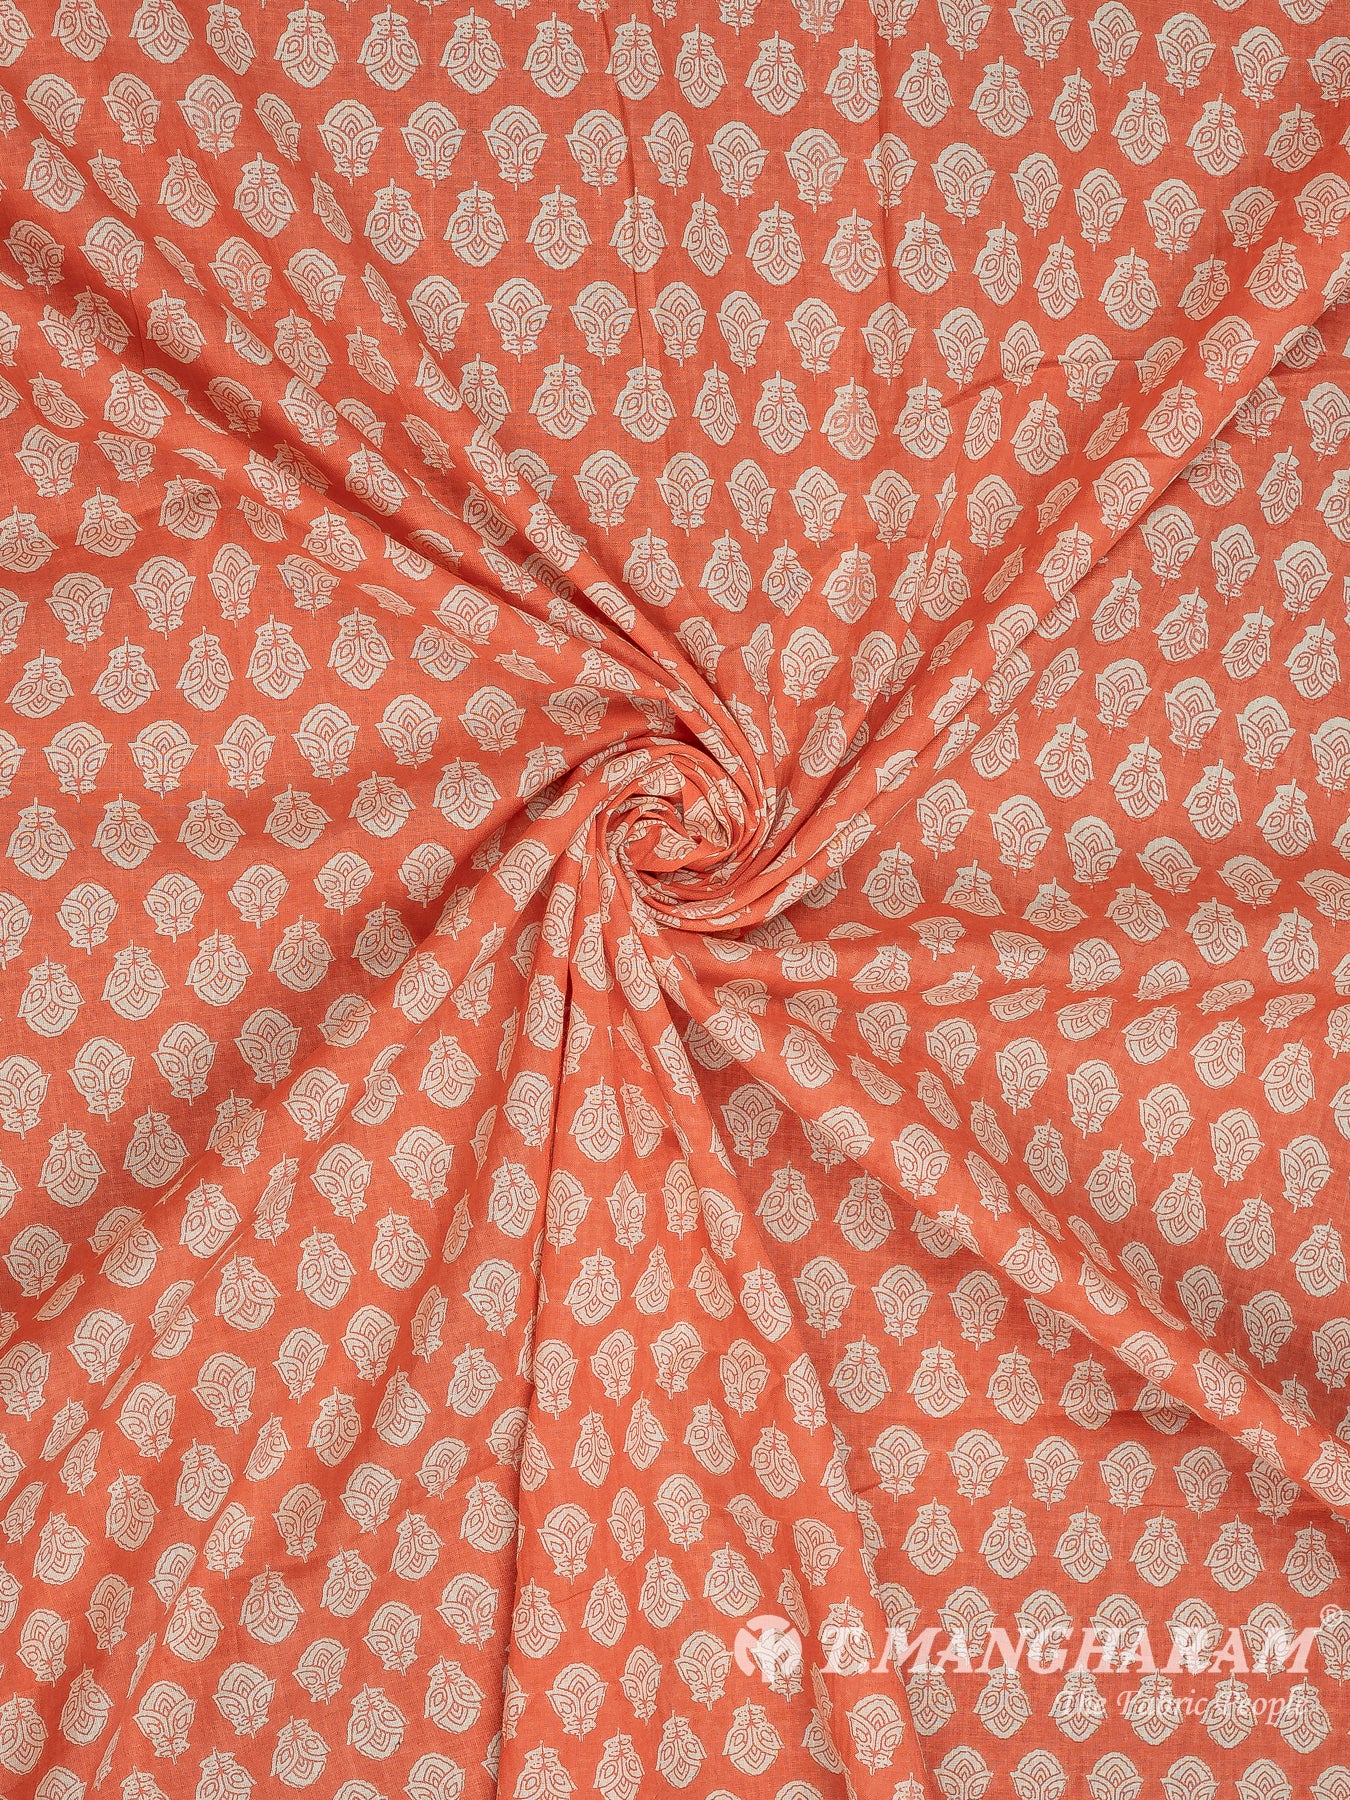 Peach Cotton Fabric - EC8338 view-1